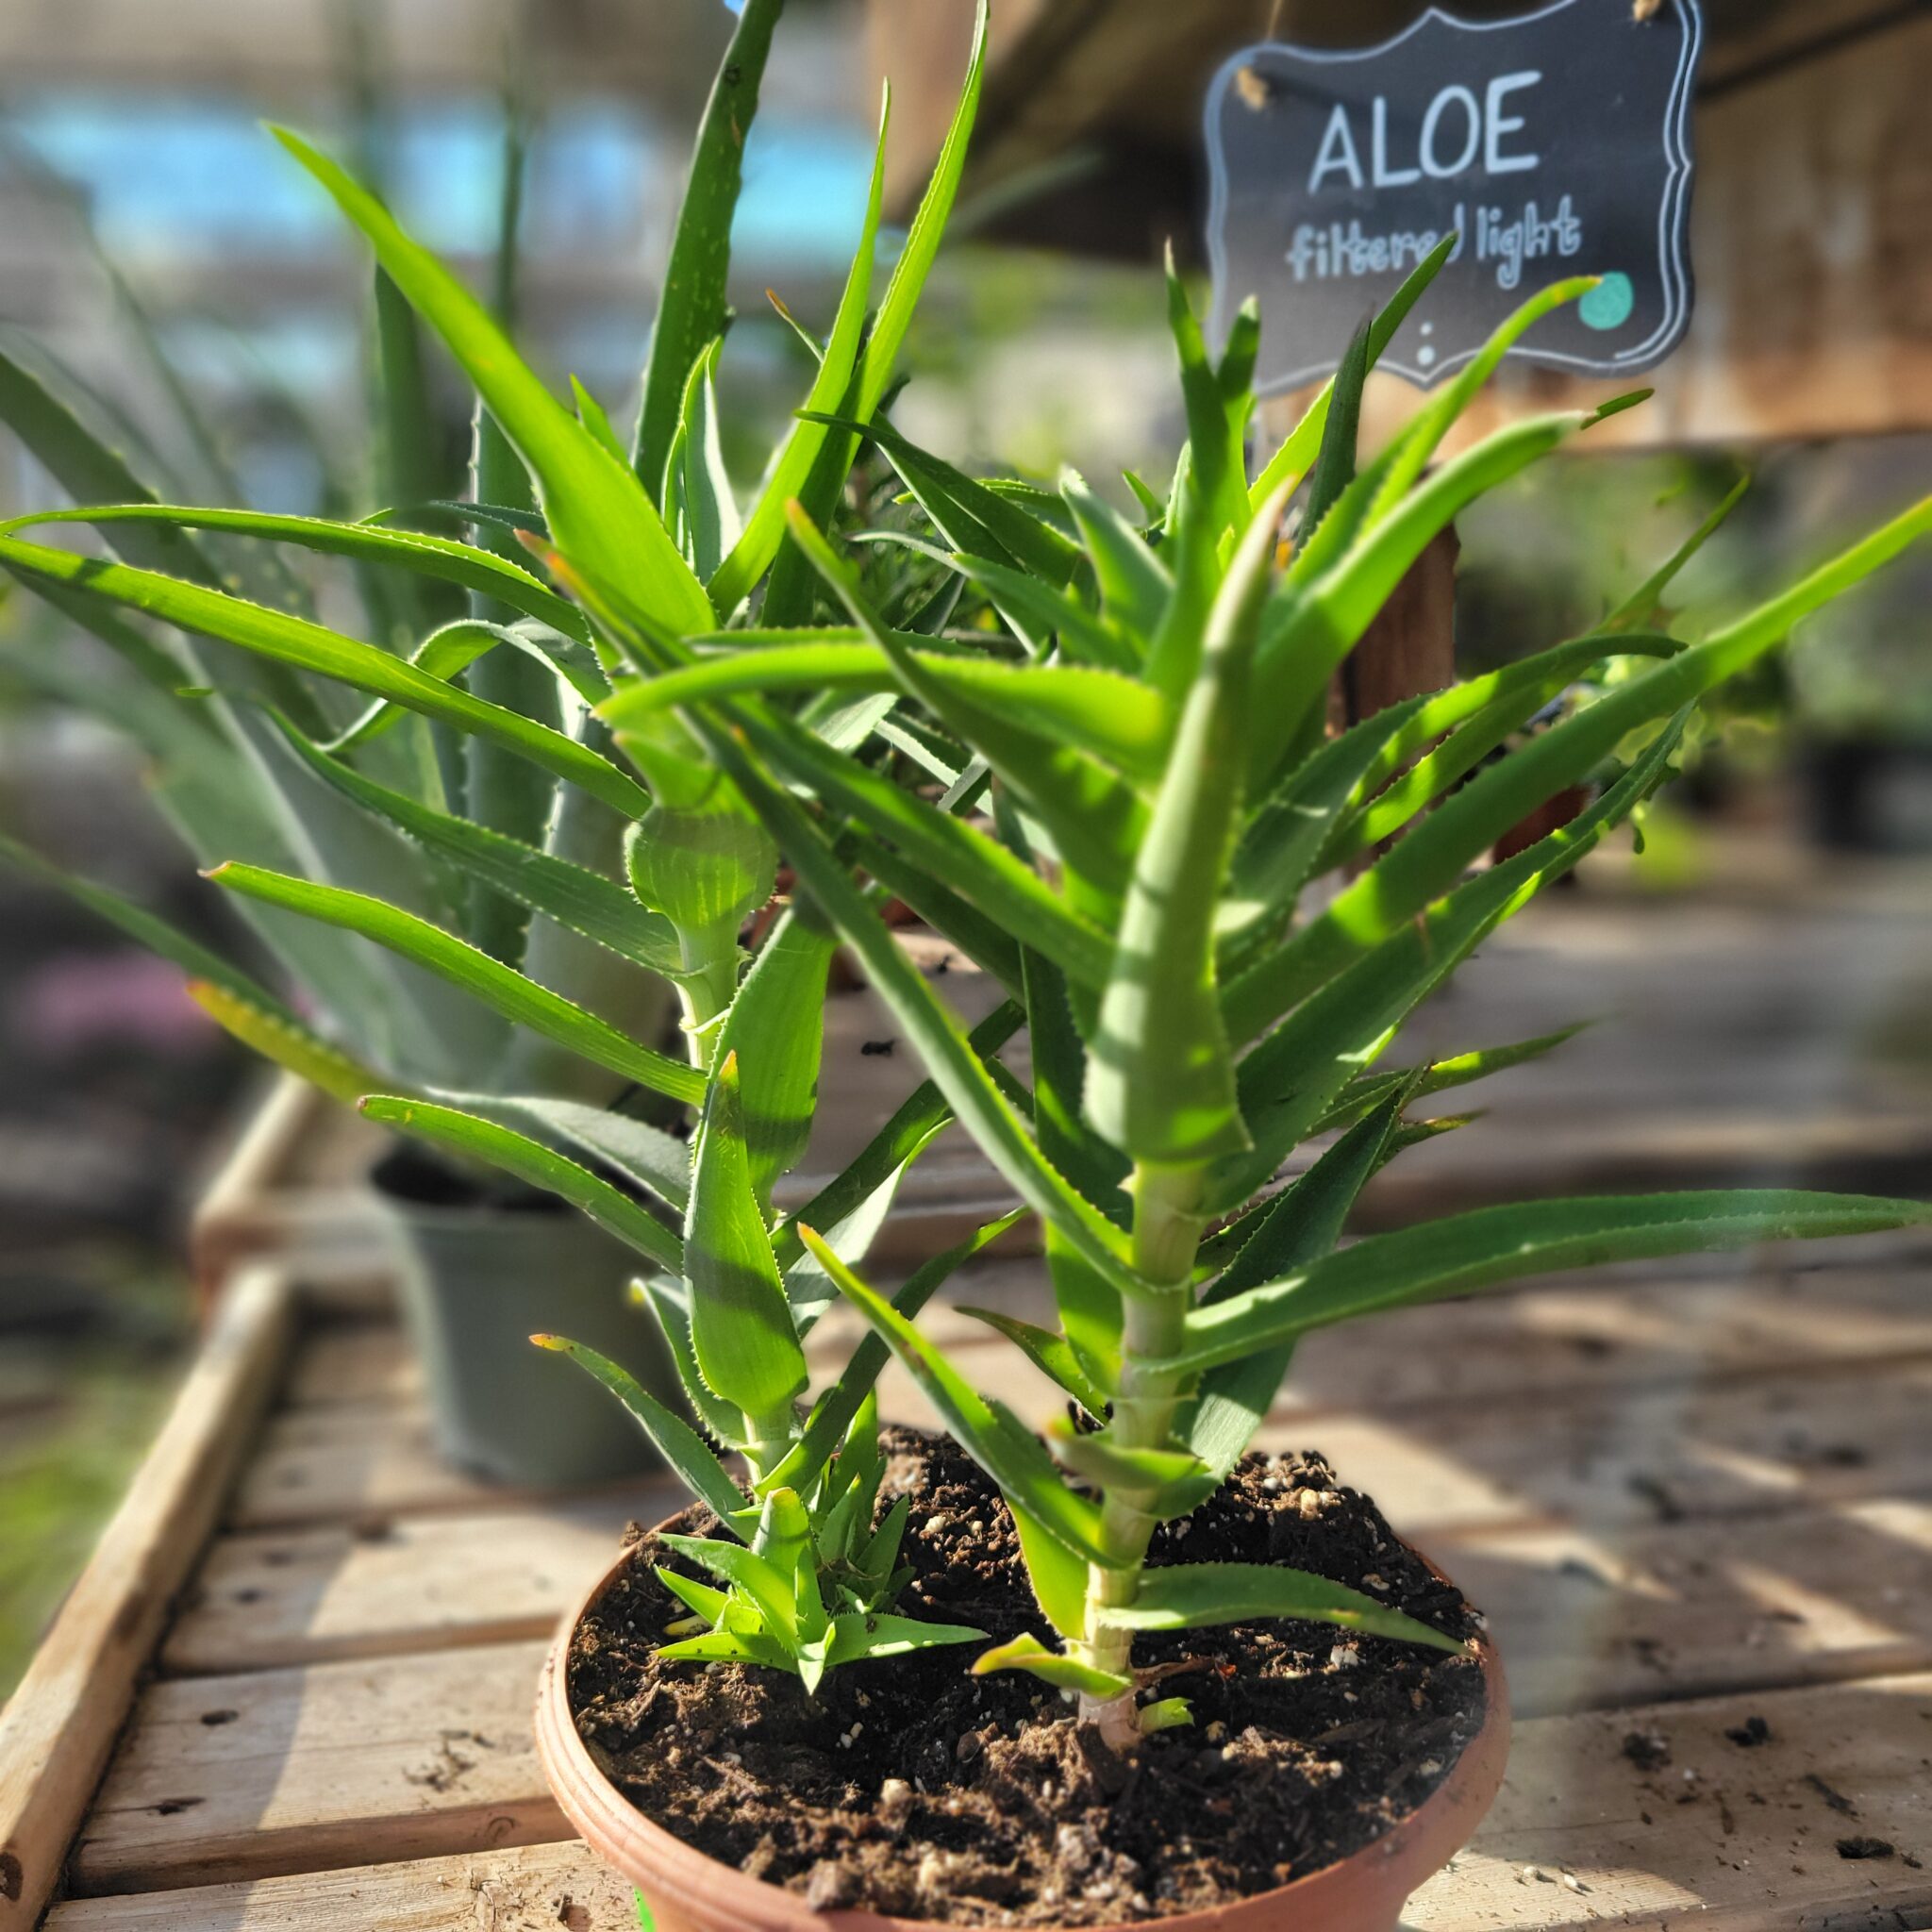 Aloe greenhouse